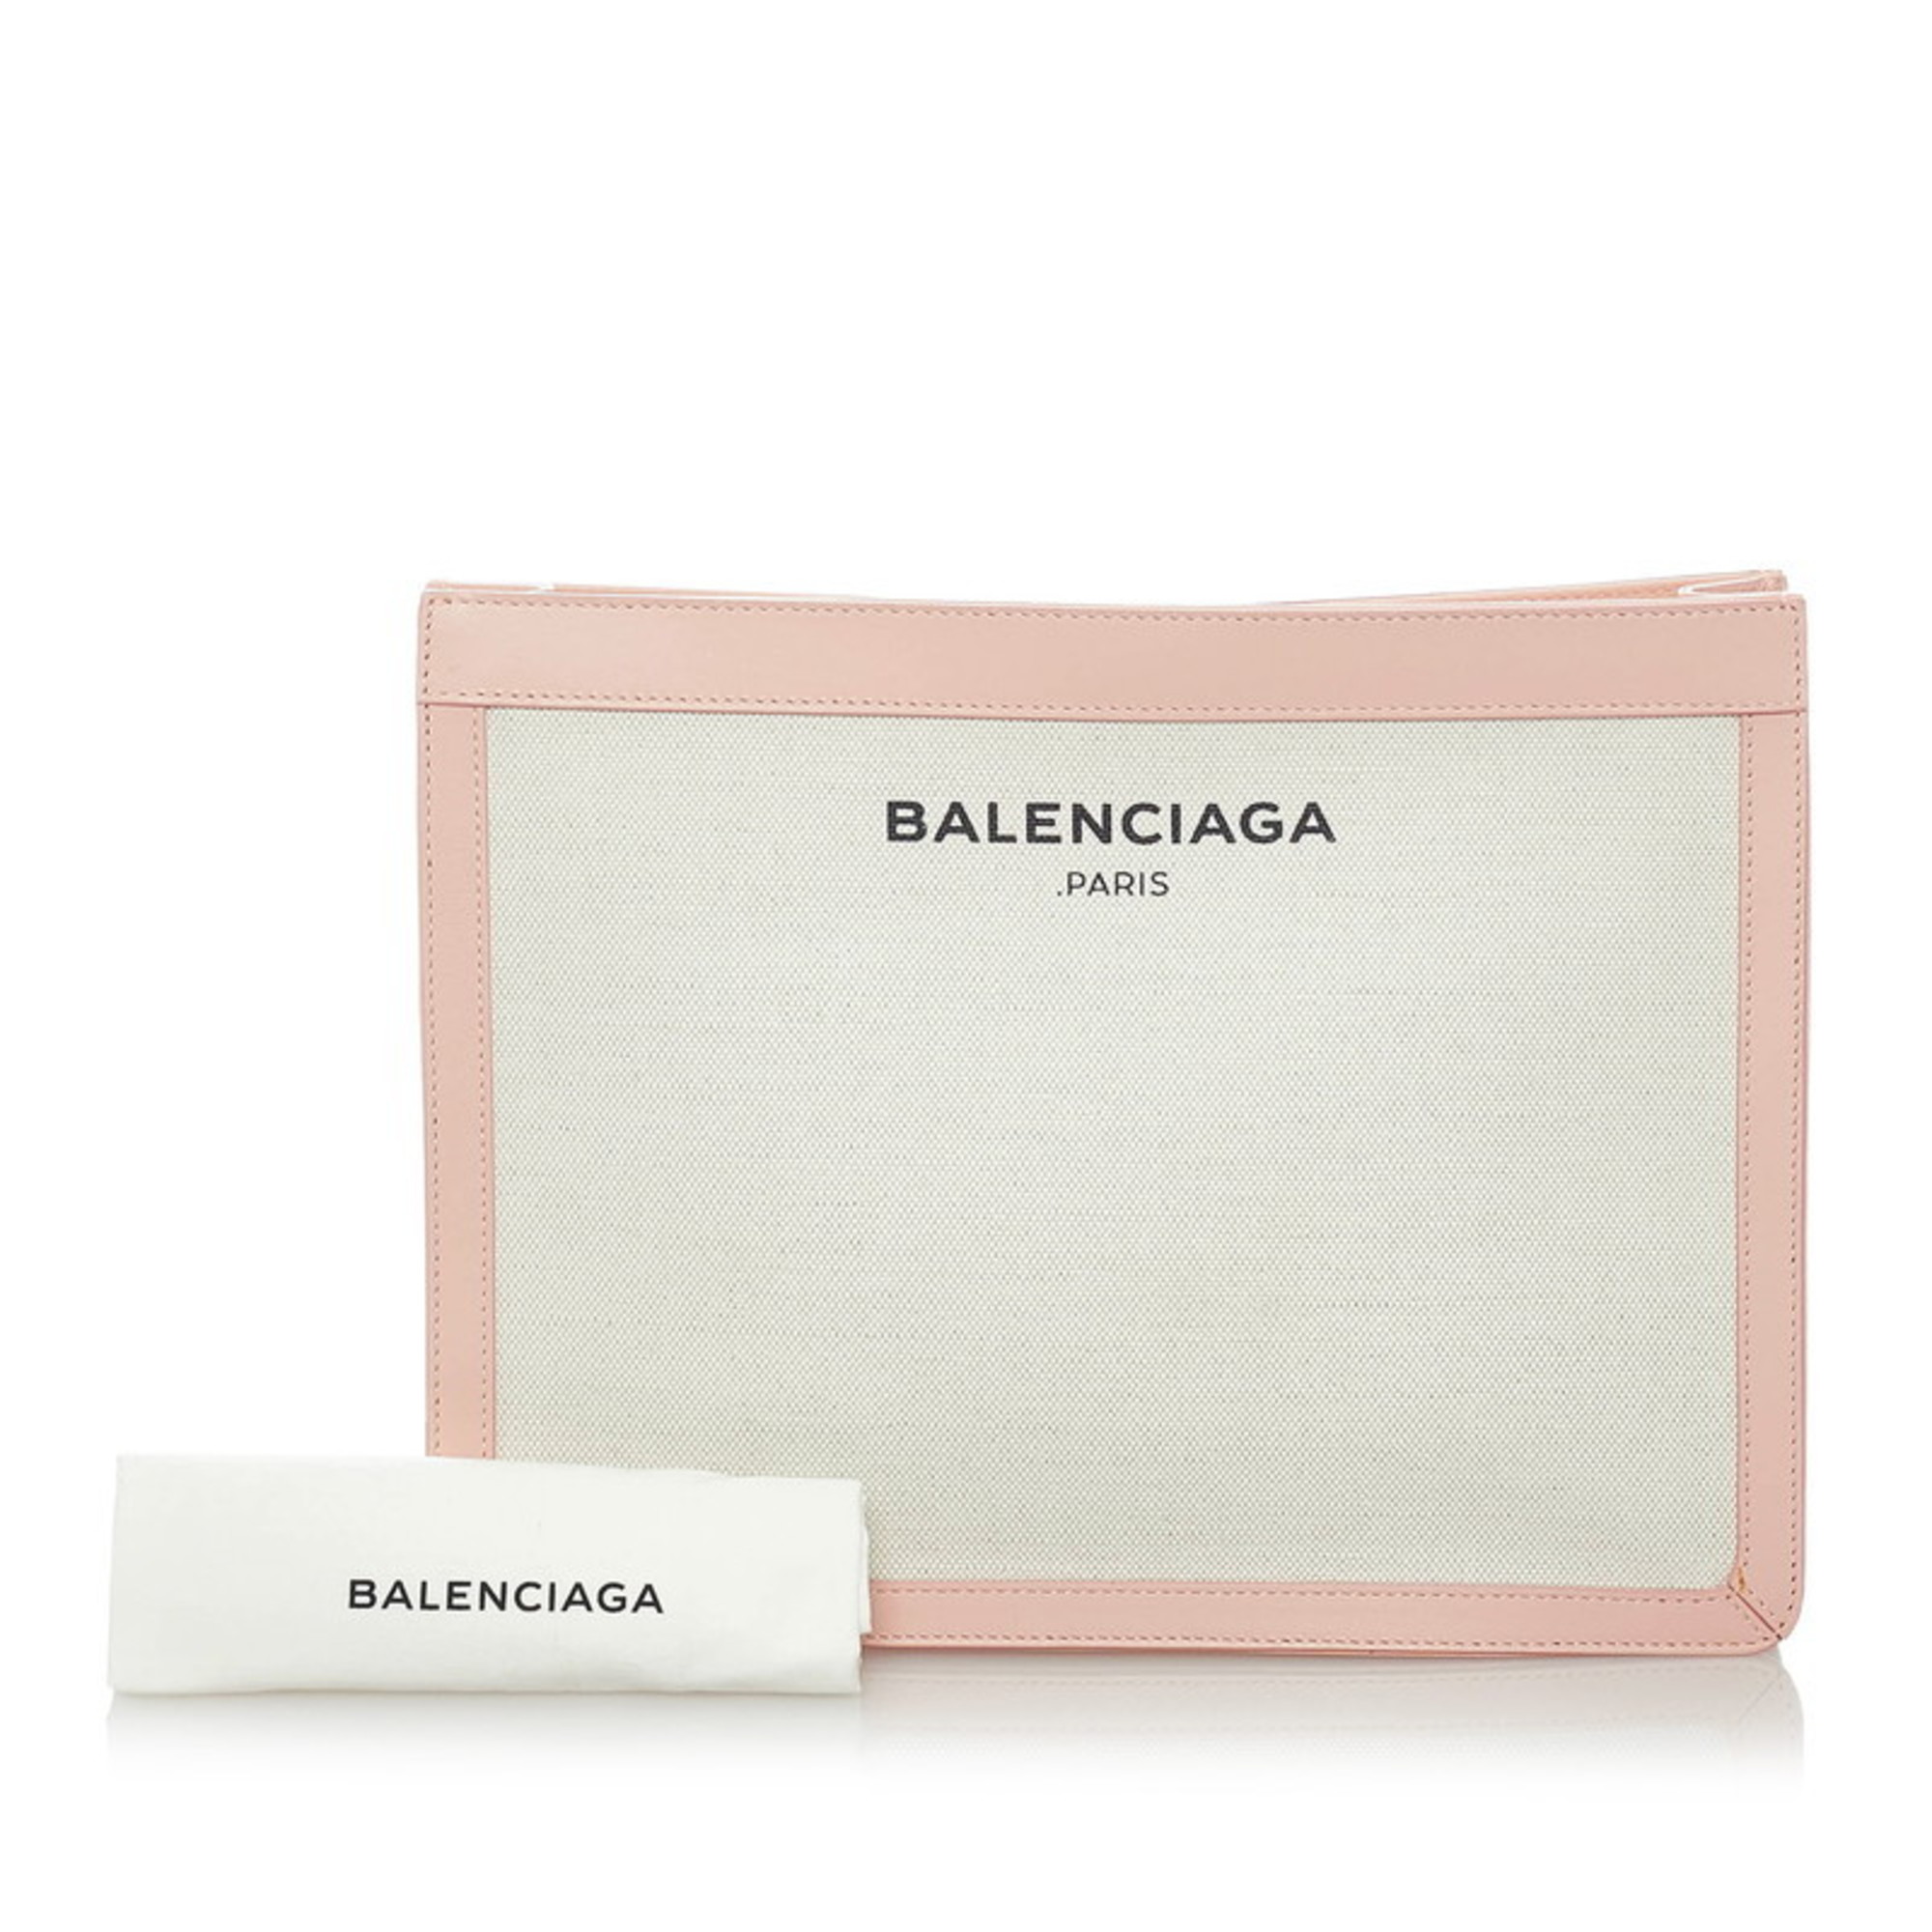 Balenciaga canvas clutch bag second 410119 ivory leather ladies BALENCIAGA